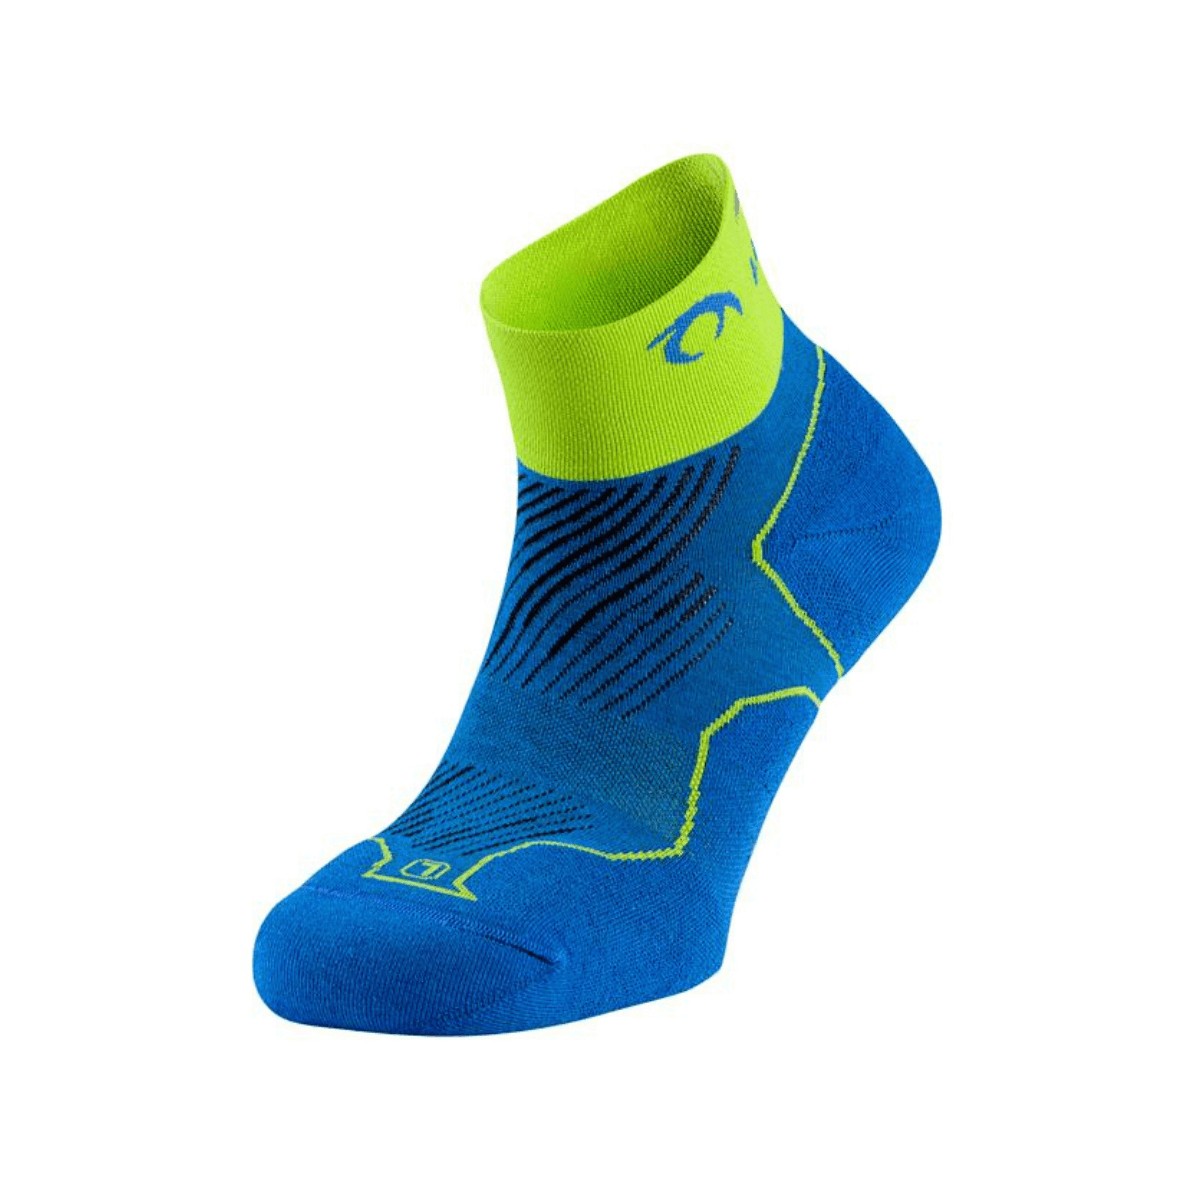 Socken 1 günstig Kaufen-Lurbel Distance Socken Blau Grün, Größe S. Lurbel Distance Socken Blau Grün, Größe S <![CDATA[Eigenschaften Running Lurbel Distanzsocken Die Lurbel Distance sind technische Socken aus 50 % Regenactiv, 25 % Cool-Tech, 17 % Pol